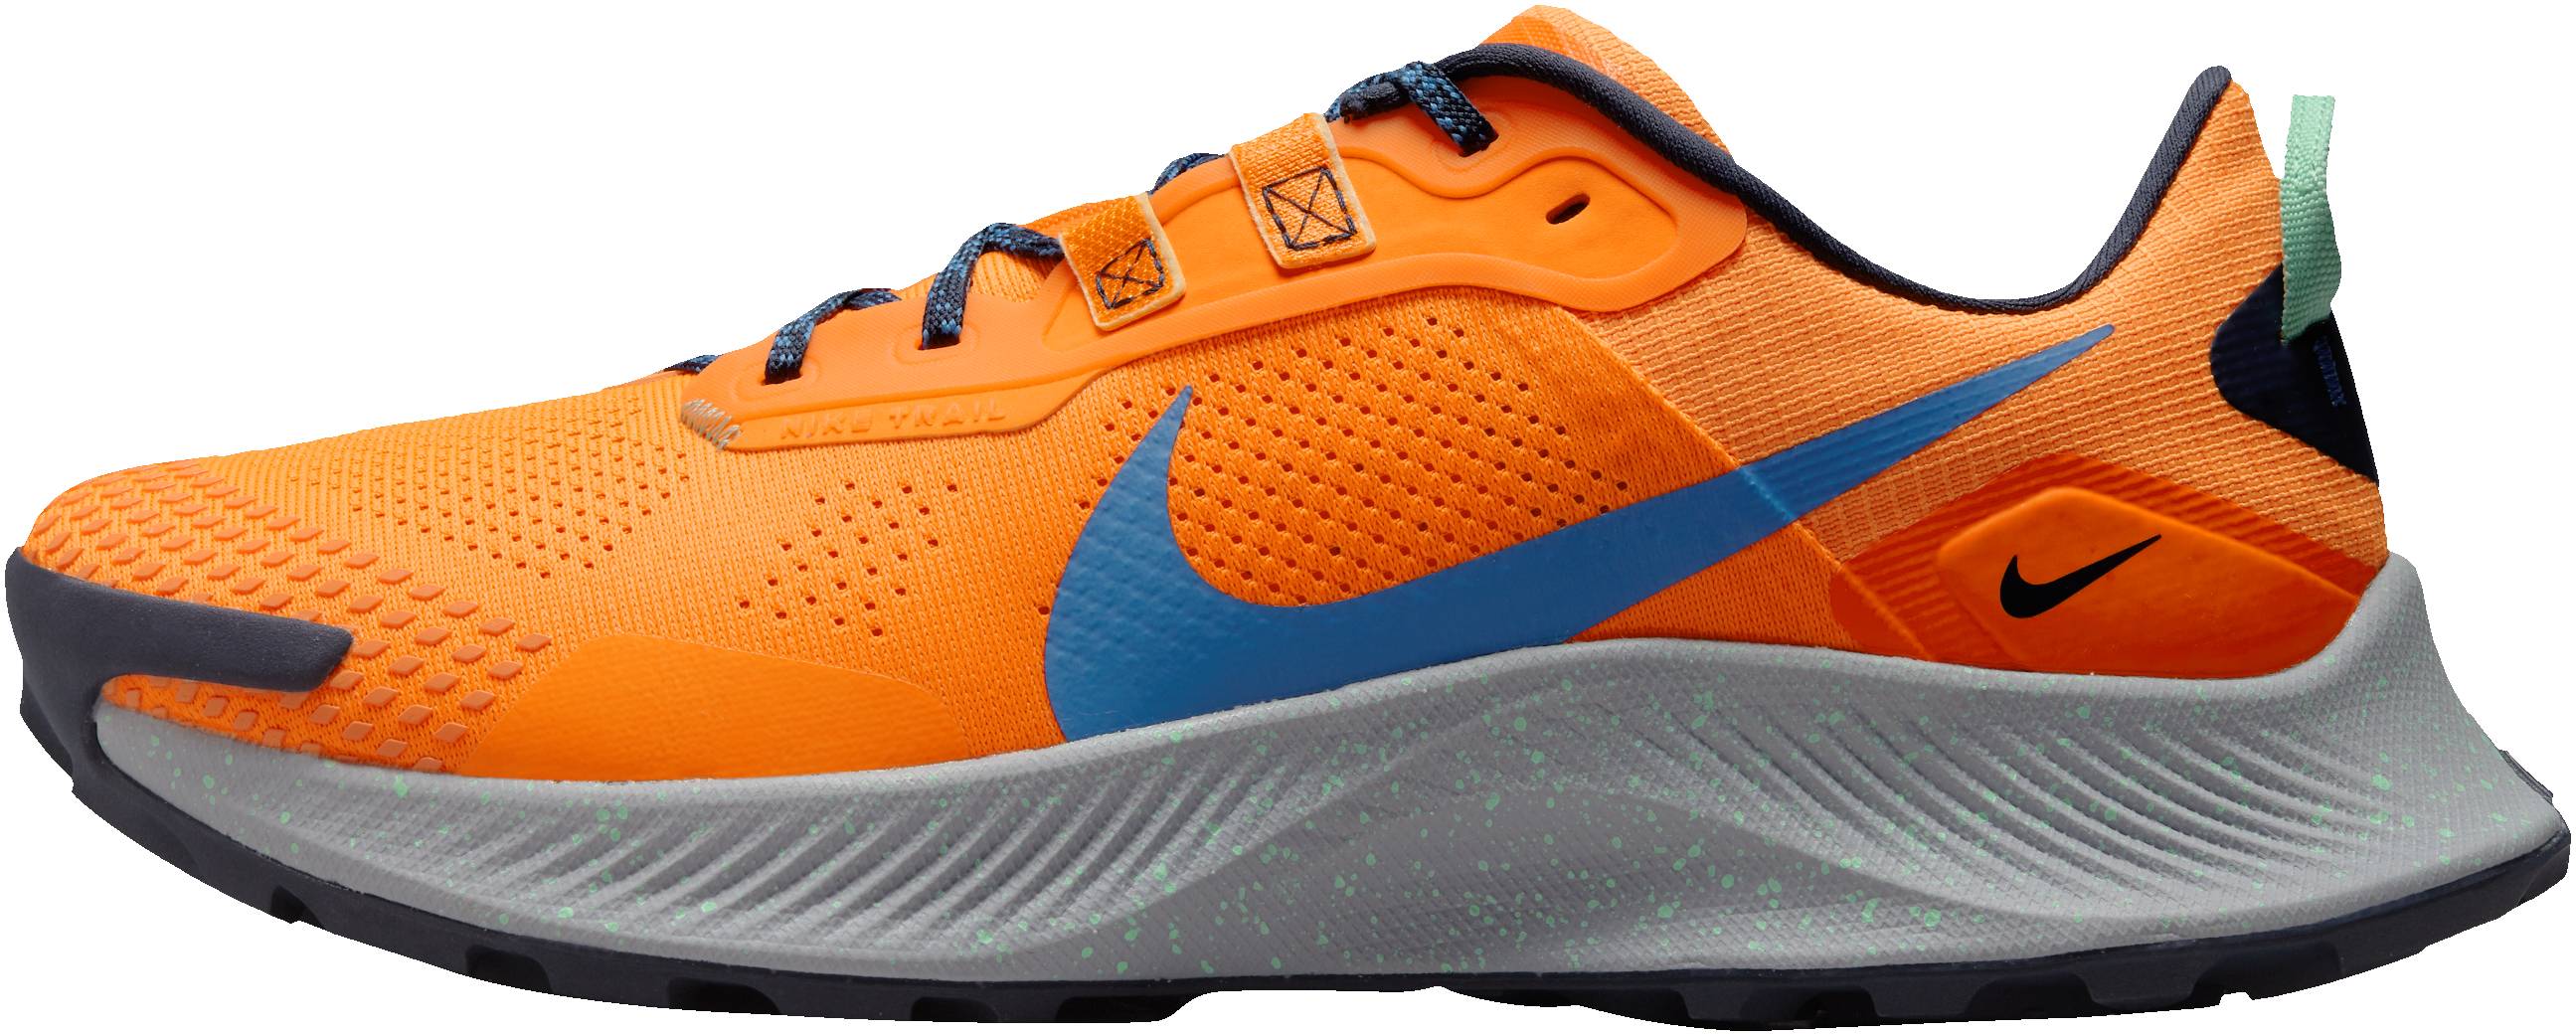 20+ Orange Nike running shoes: Save up 